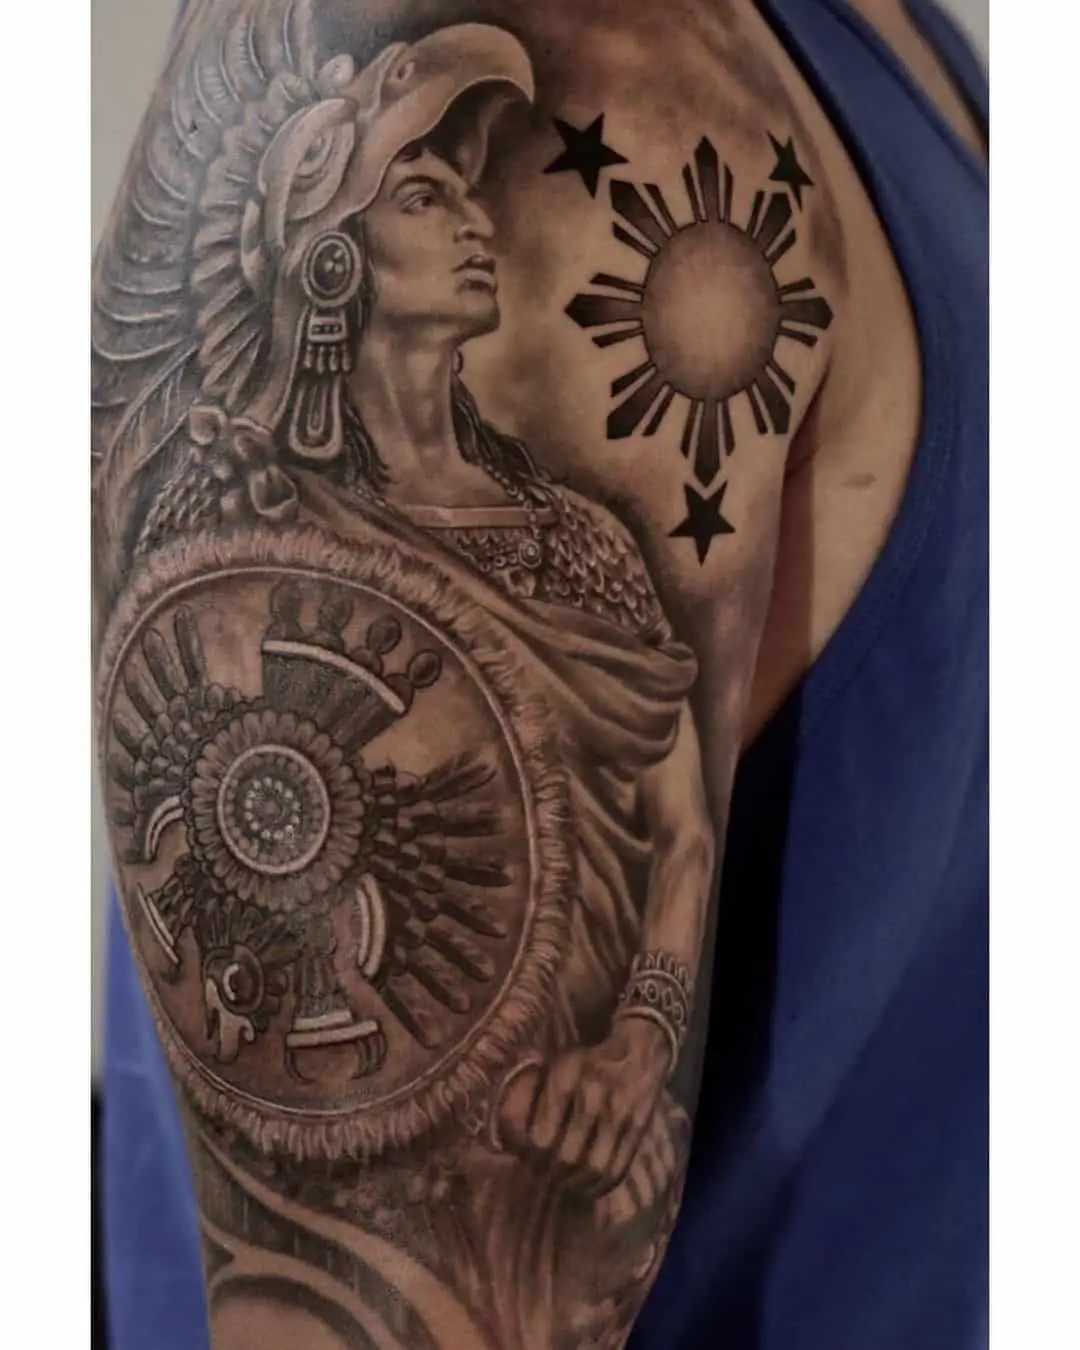 Filipino sun tattoos